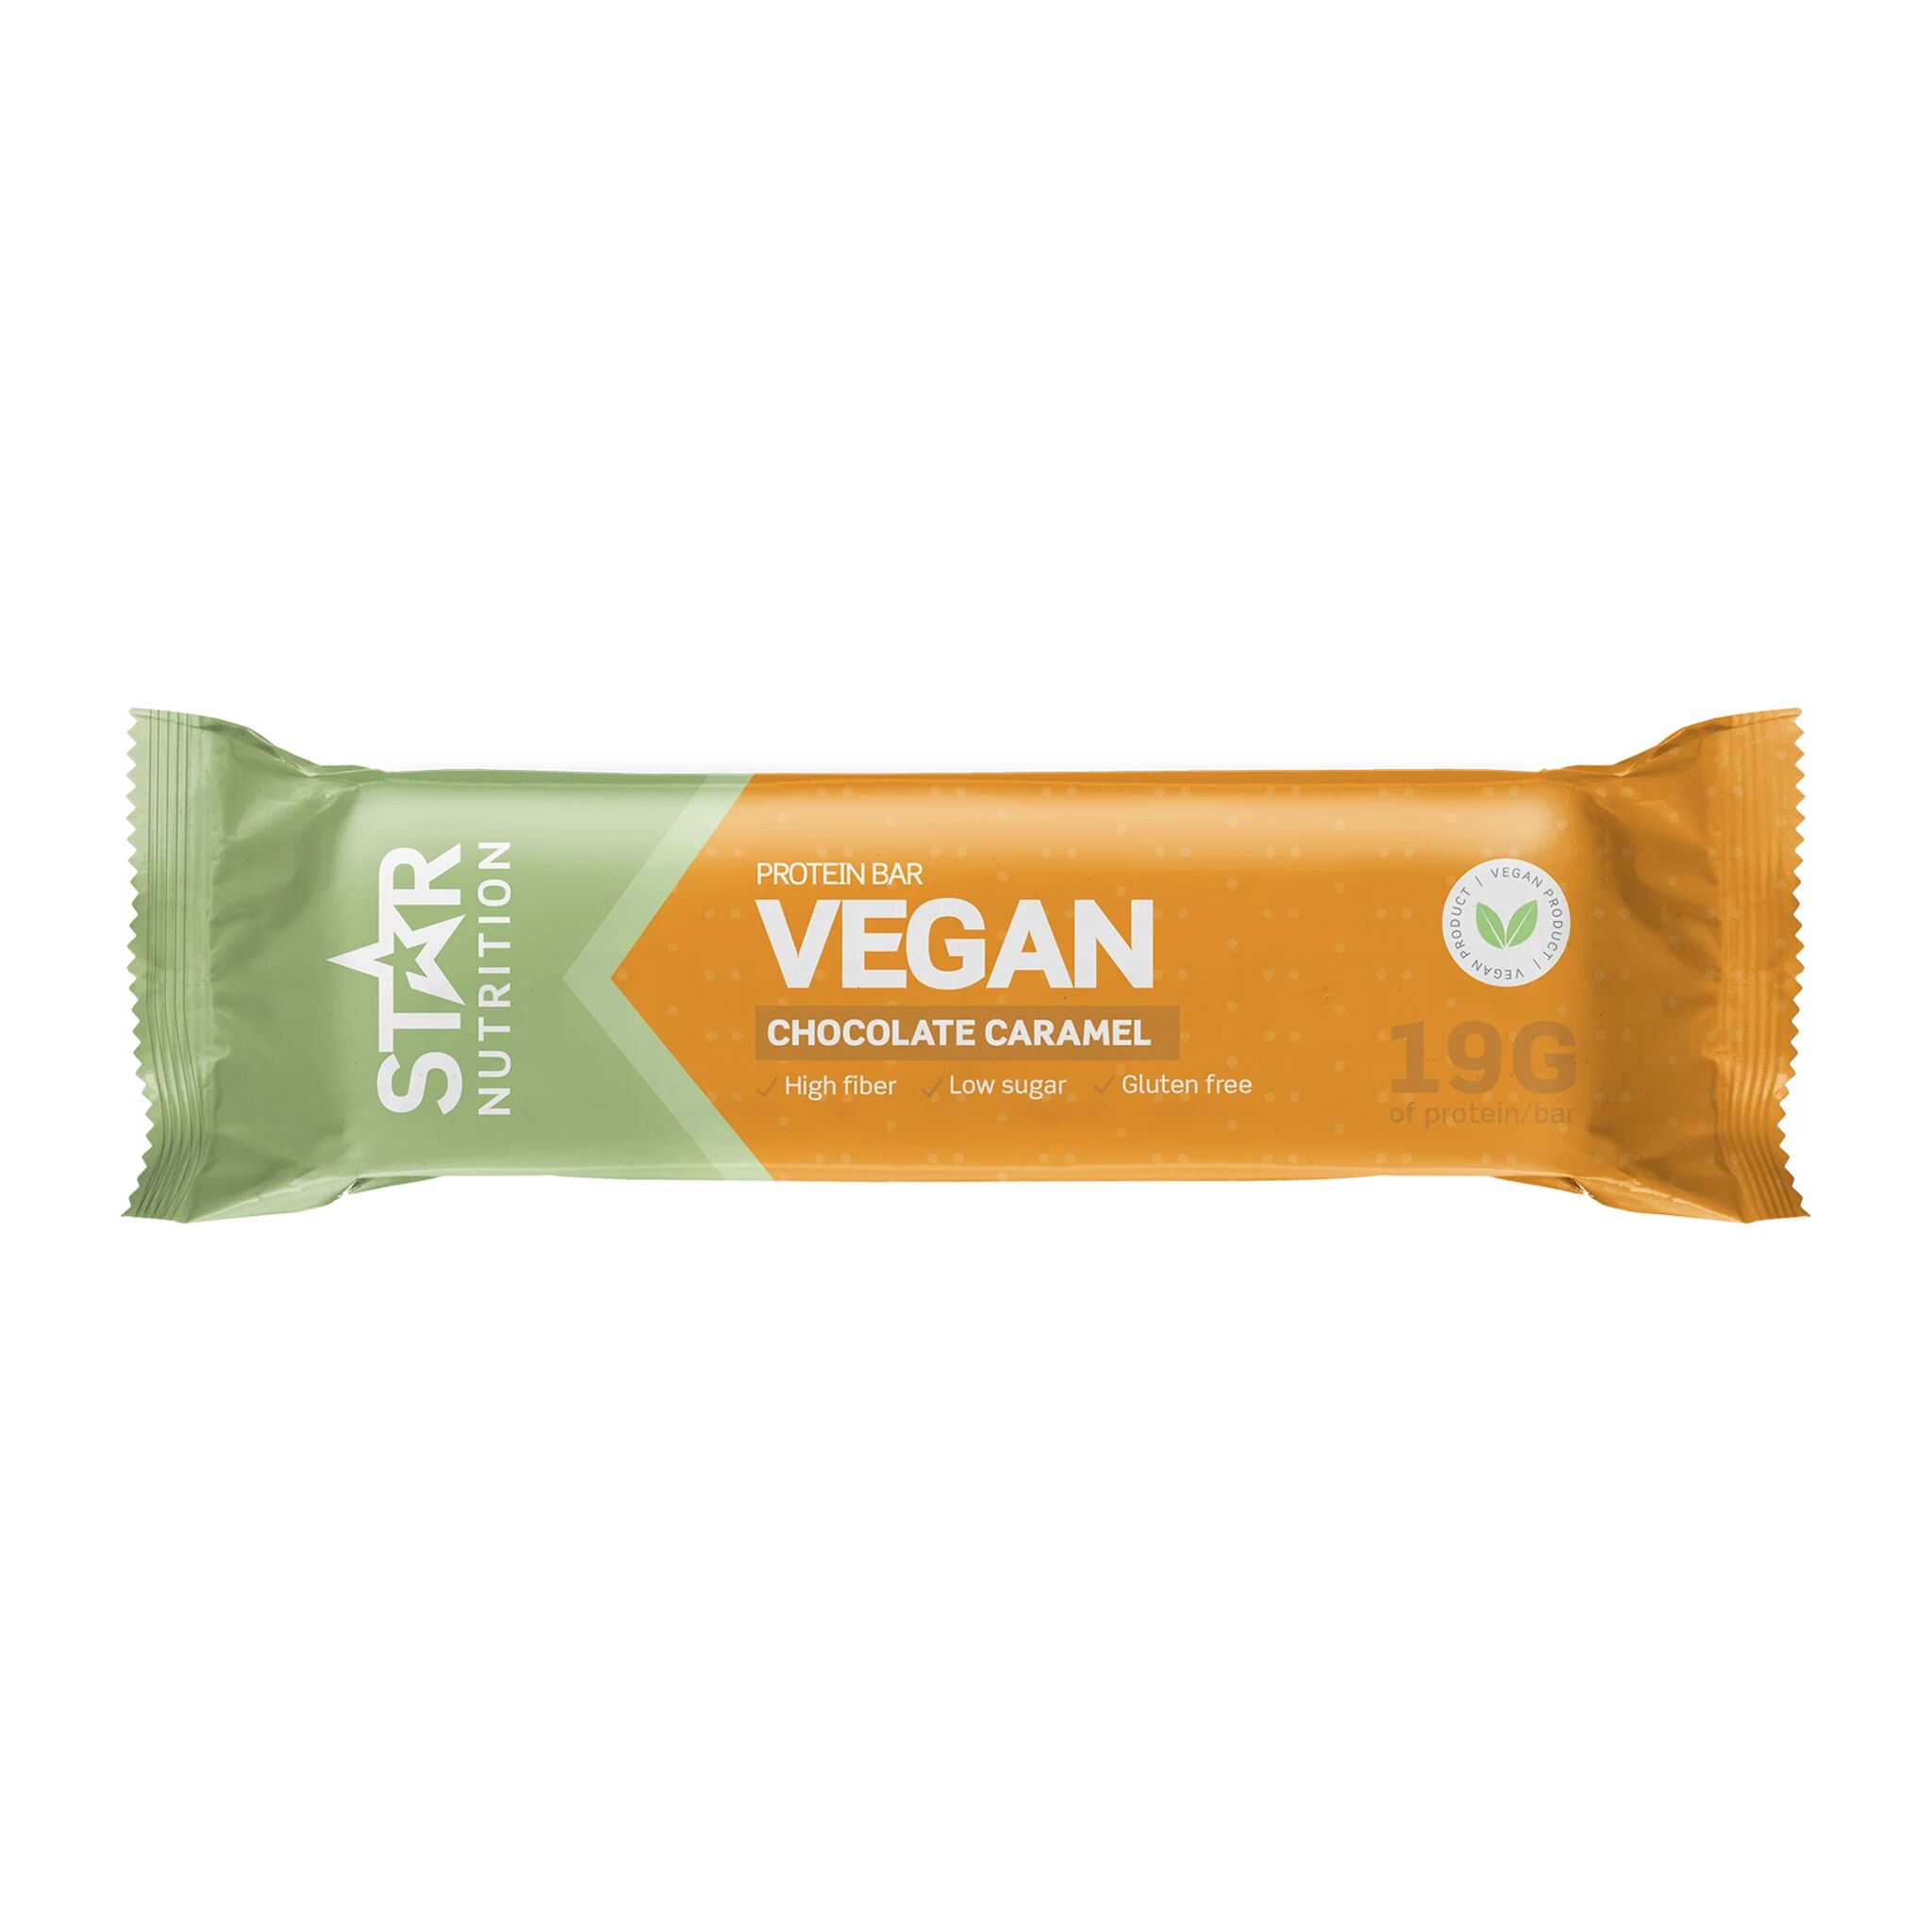 Star Nutrition Vegan Protein Bar, 55 G, Caramel Chocolate, proteinbar 55chocolate STD